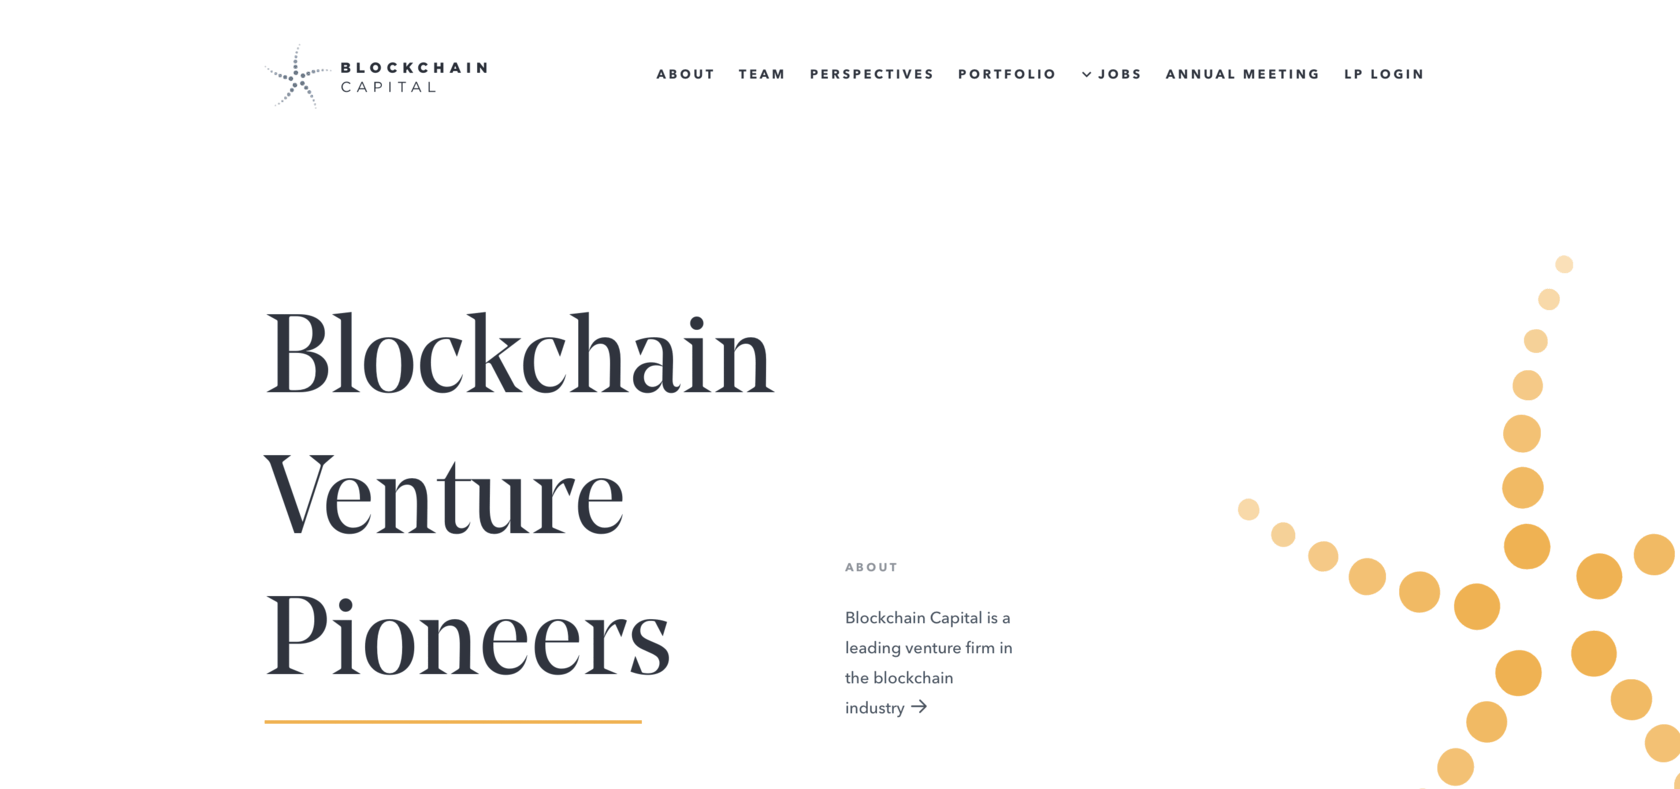 Blockchain Capital - site image